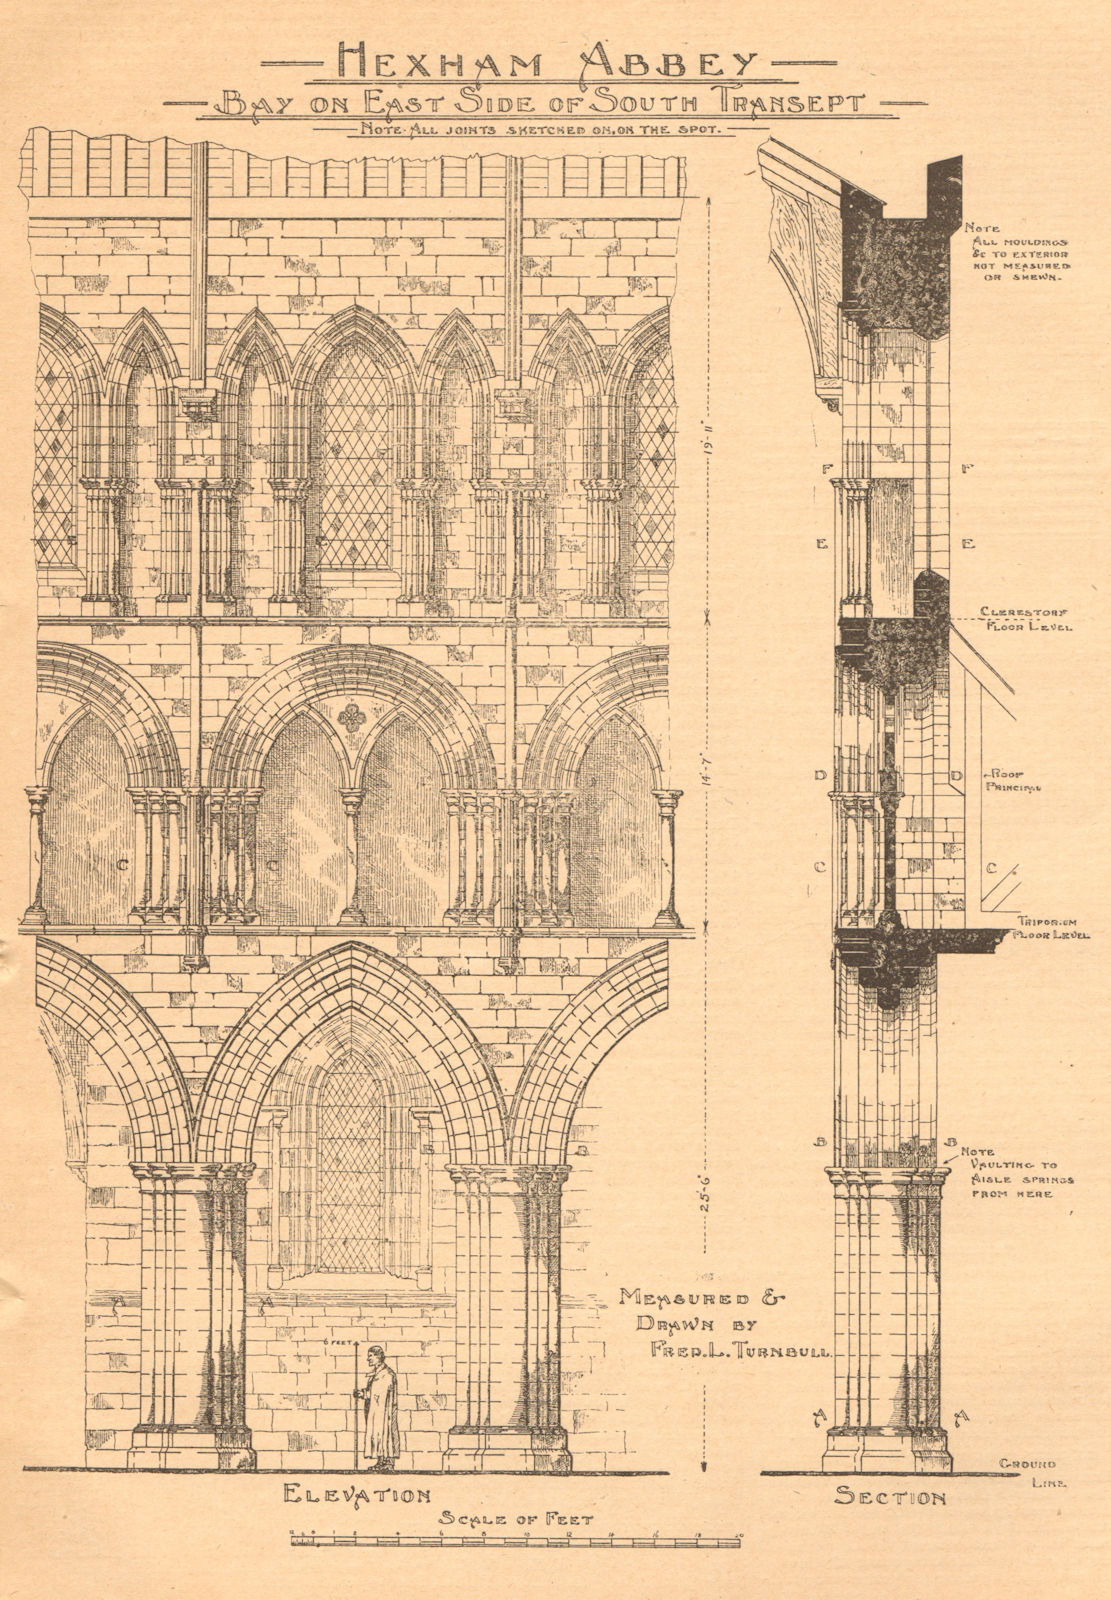 Hexham Abbey. Bay south transept. Elevation & section. Northumberland 1904